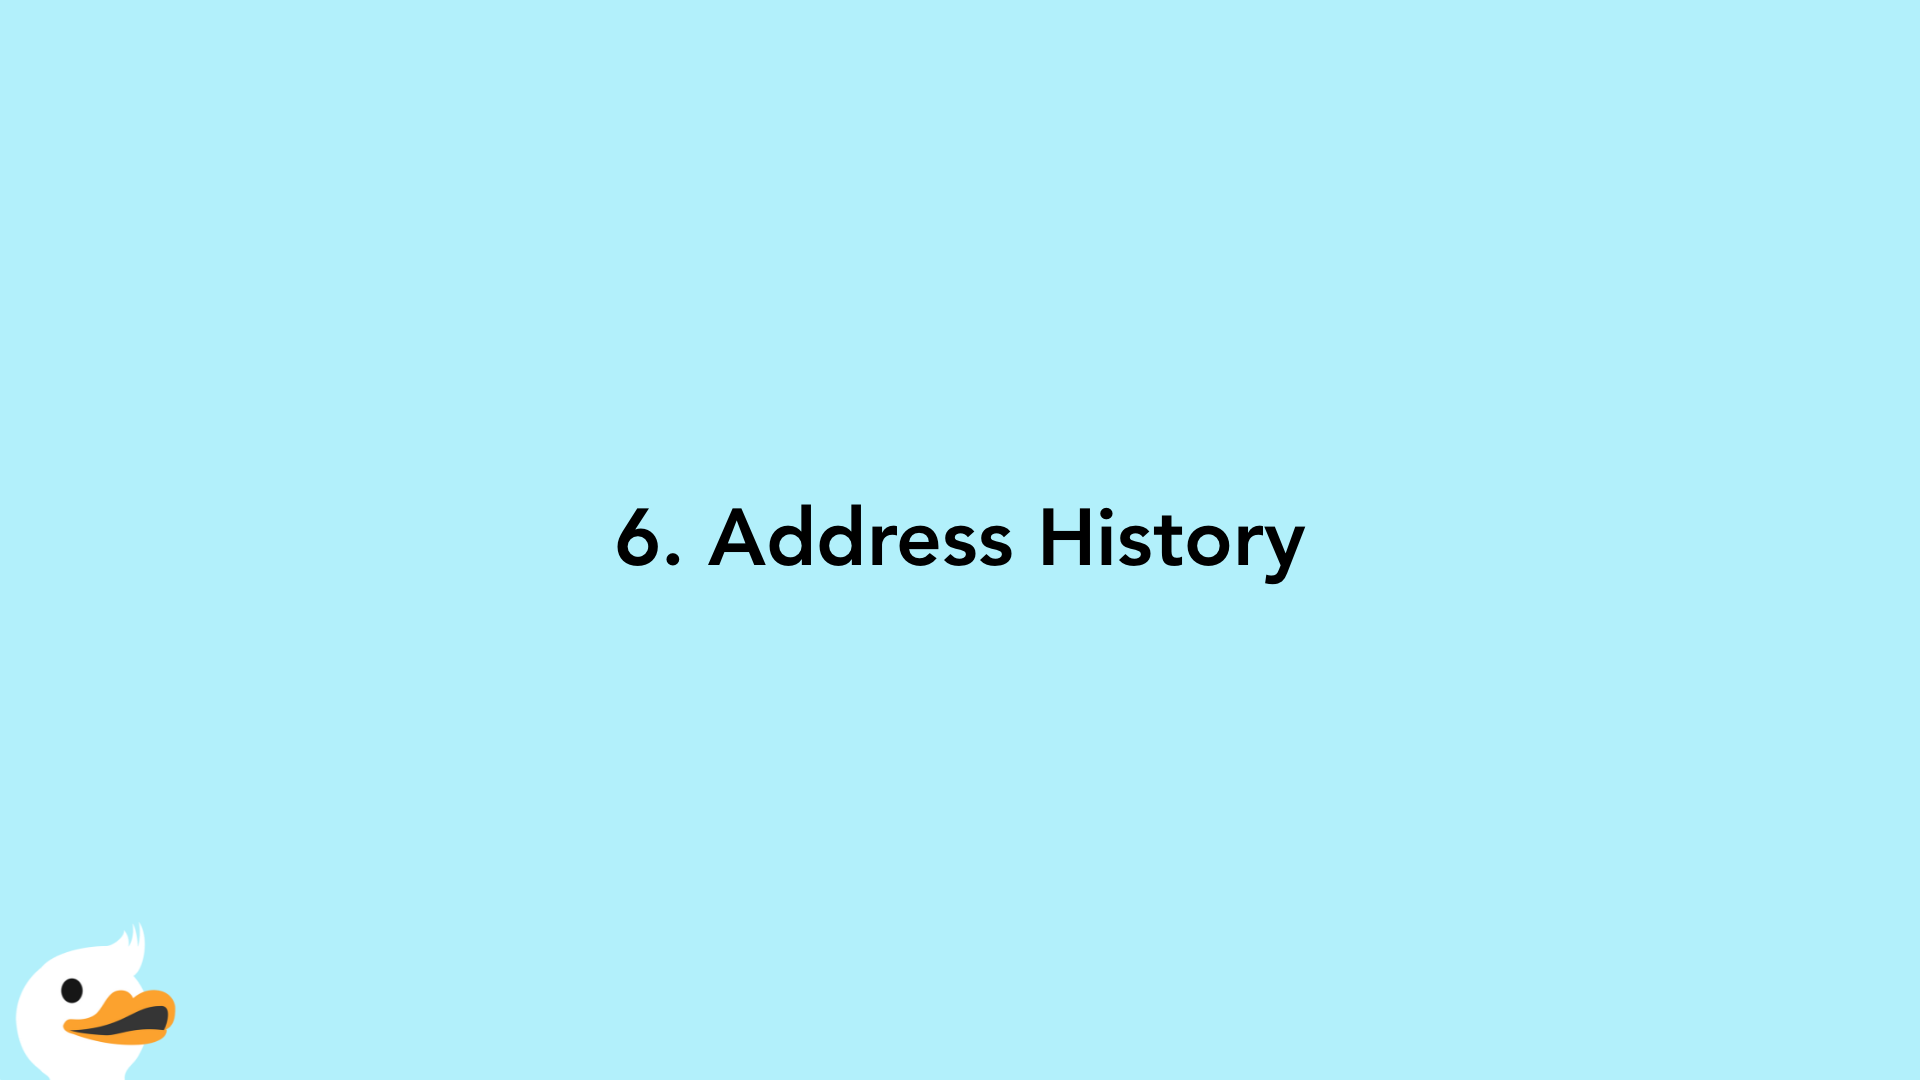 6. Address History